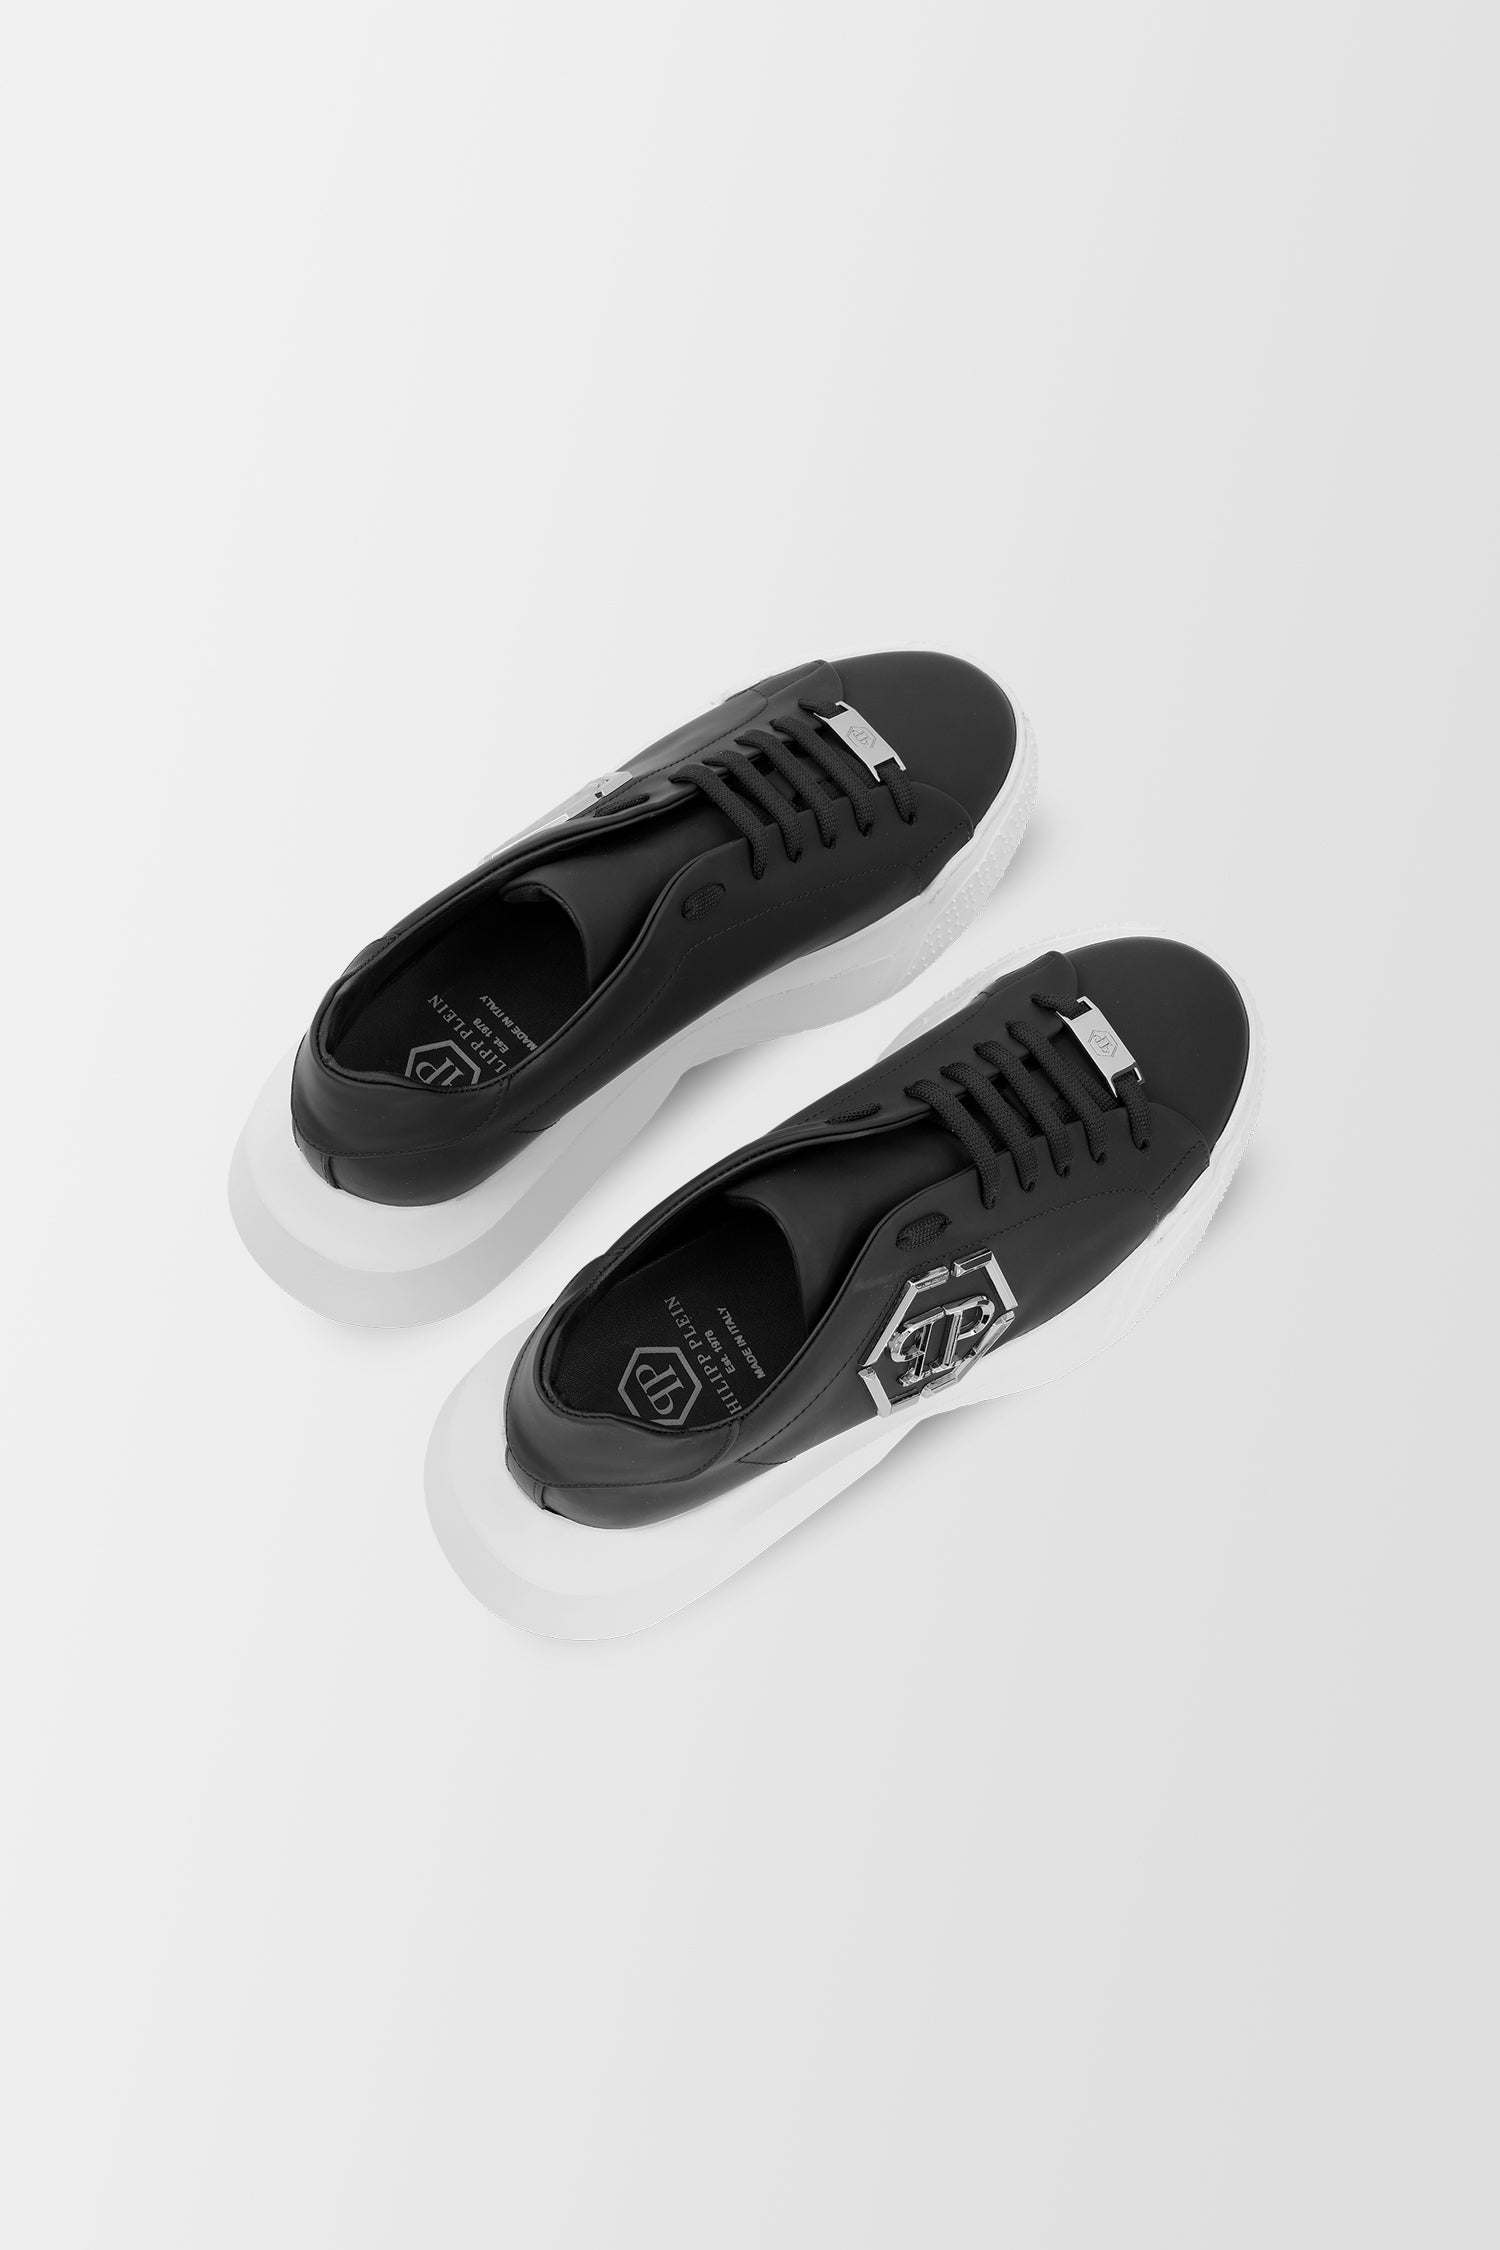 Philipp Plein Black/Multi Gothic Plein Hghi-top Sock Sneakers, Brand Size  41 ( US Size 8 ) A18S MSC1671 PTE074N 02 - Shoes - Jomashop